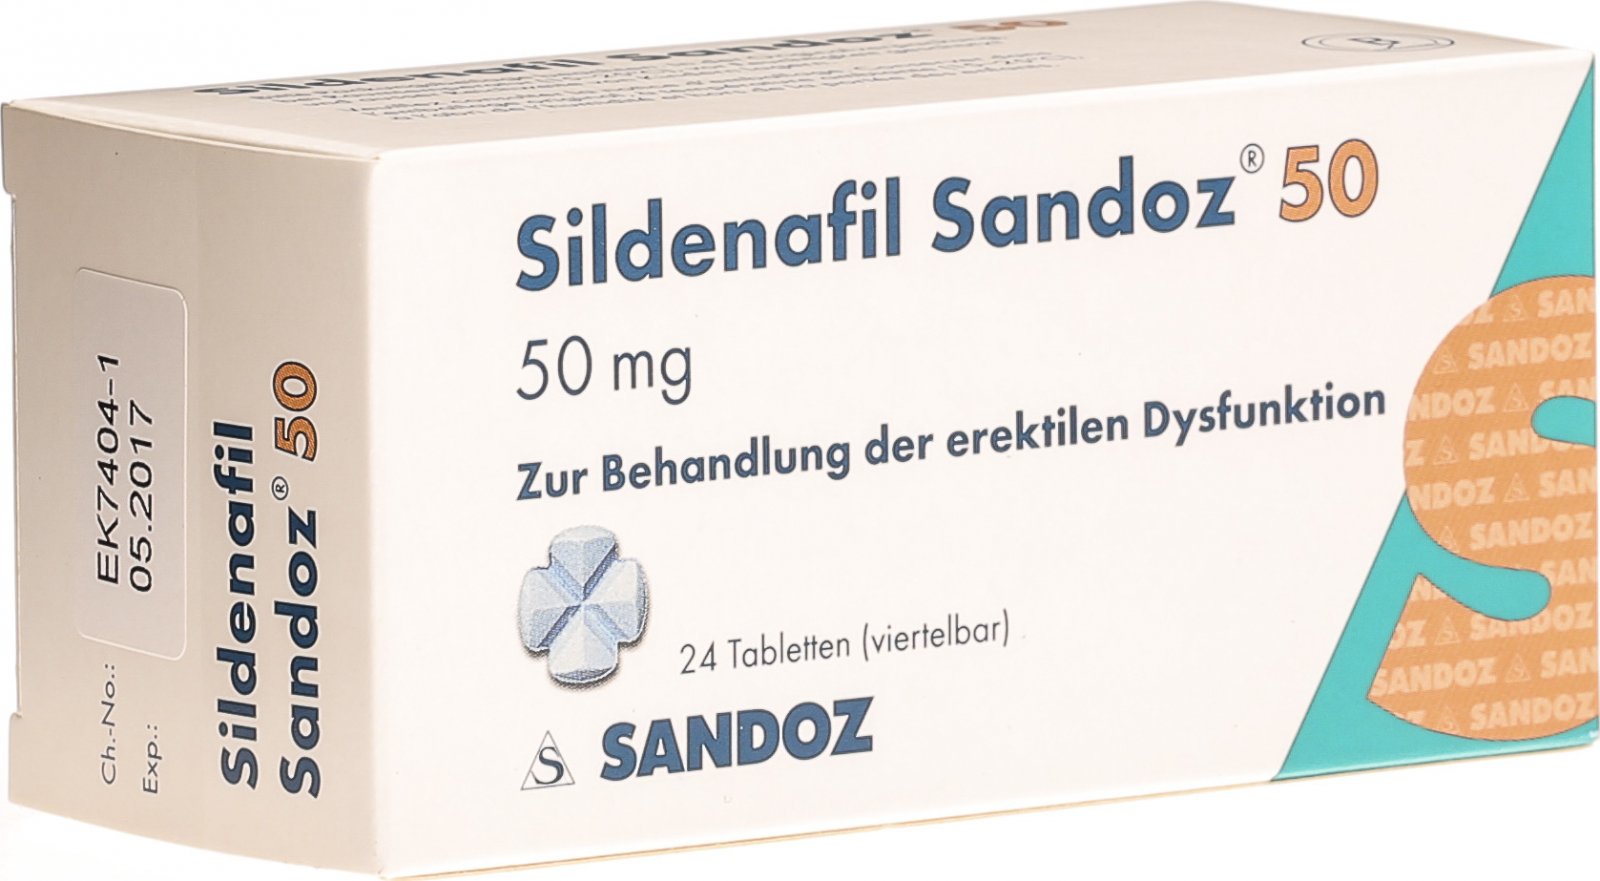 Sildenafil Sandoz Tabletten 50mg 24 Stuck In Der Adler Apotheke